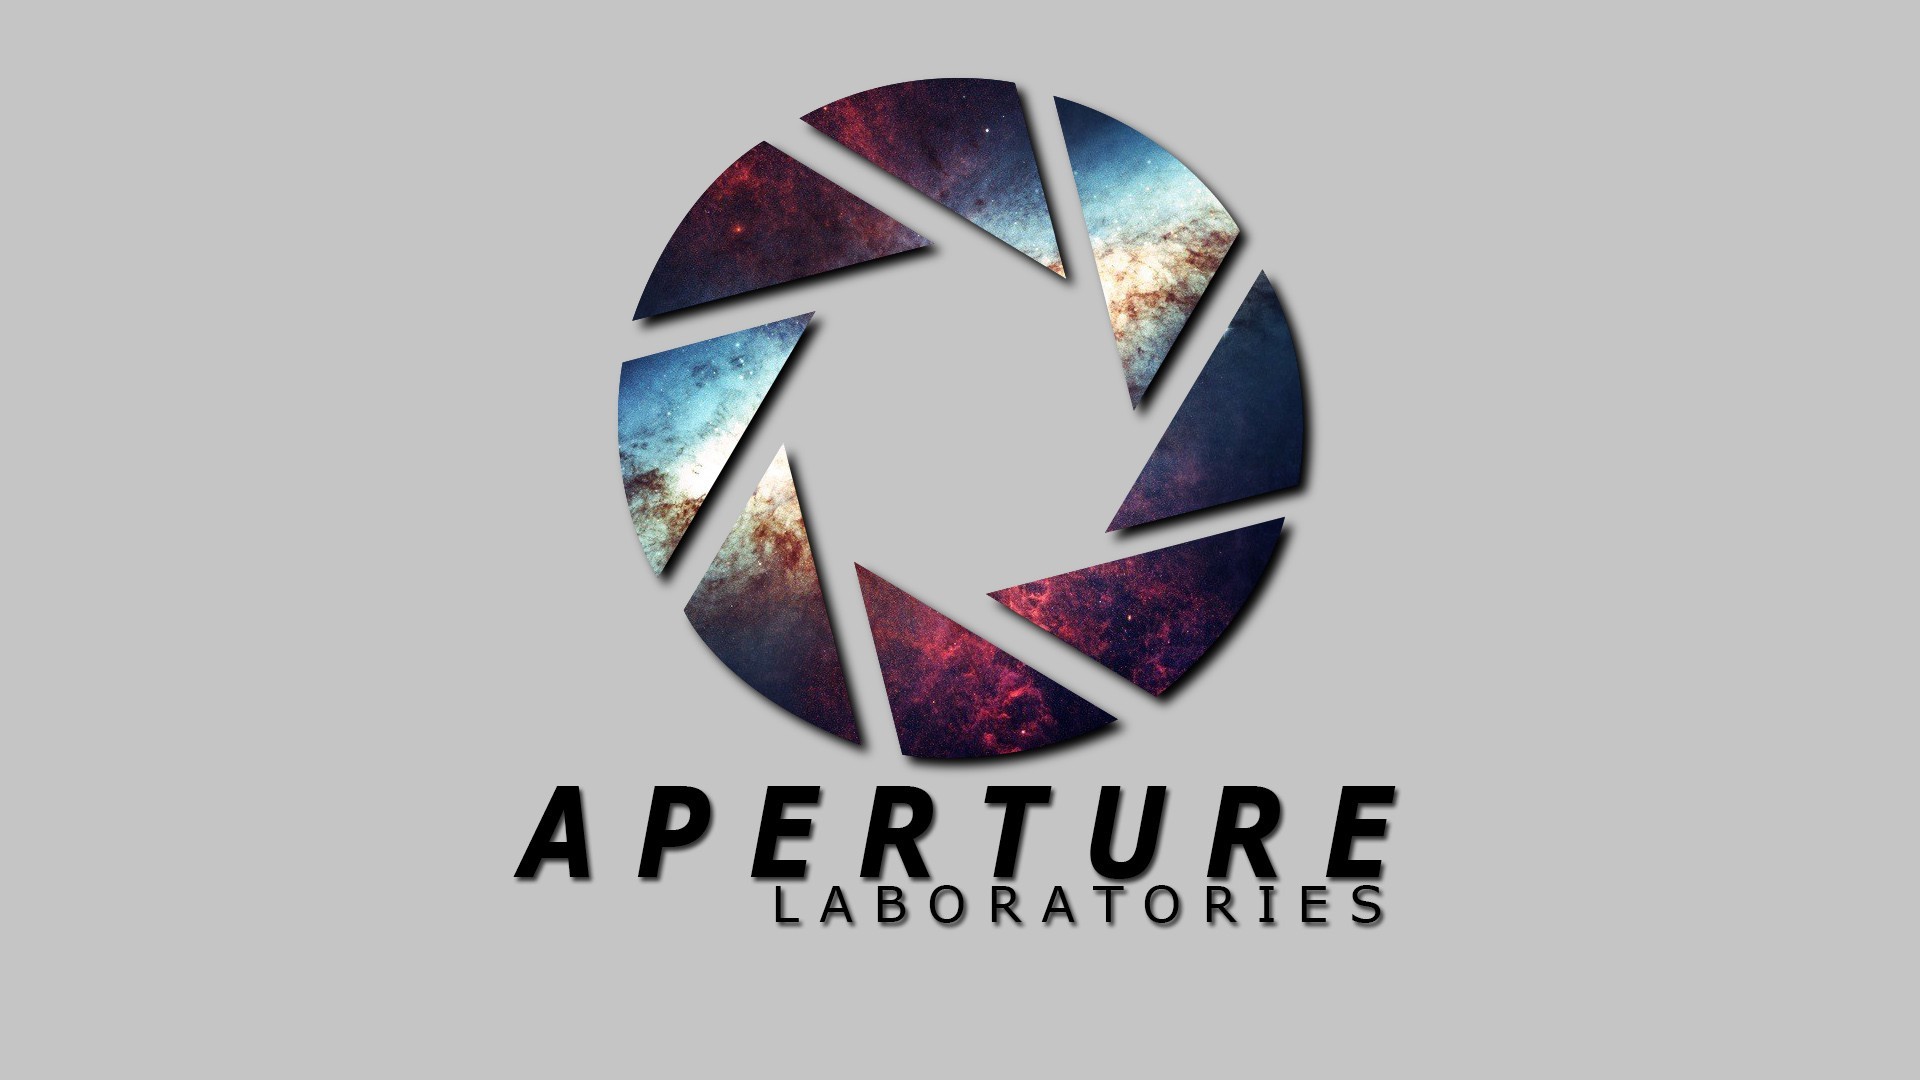 Portal, Aperture Laboratories, Aperture, Valve, Steam (software) Wallpaper